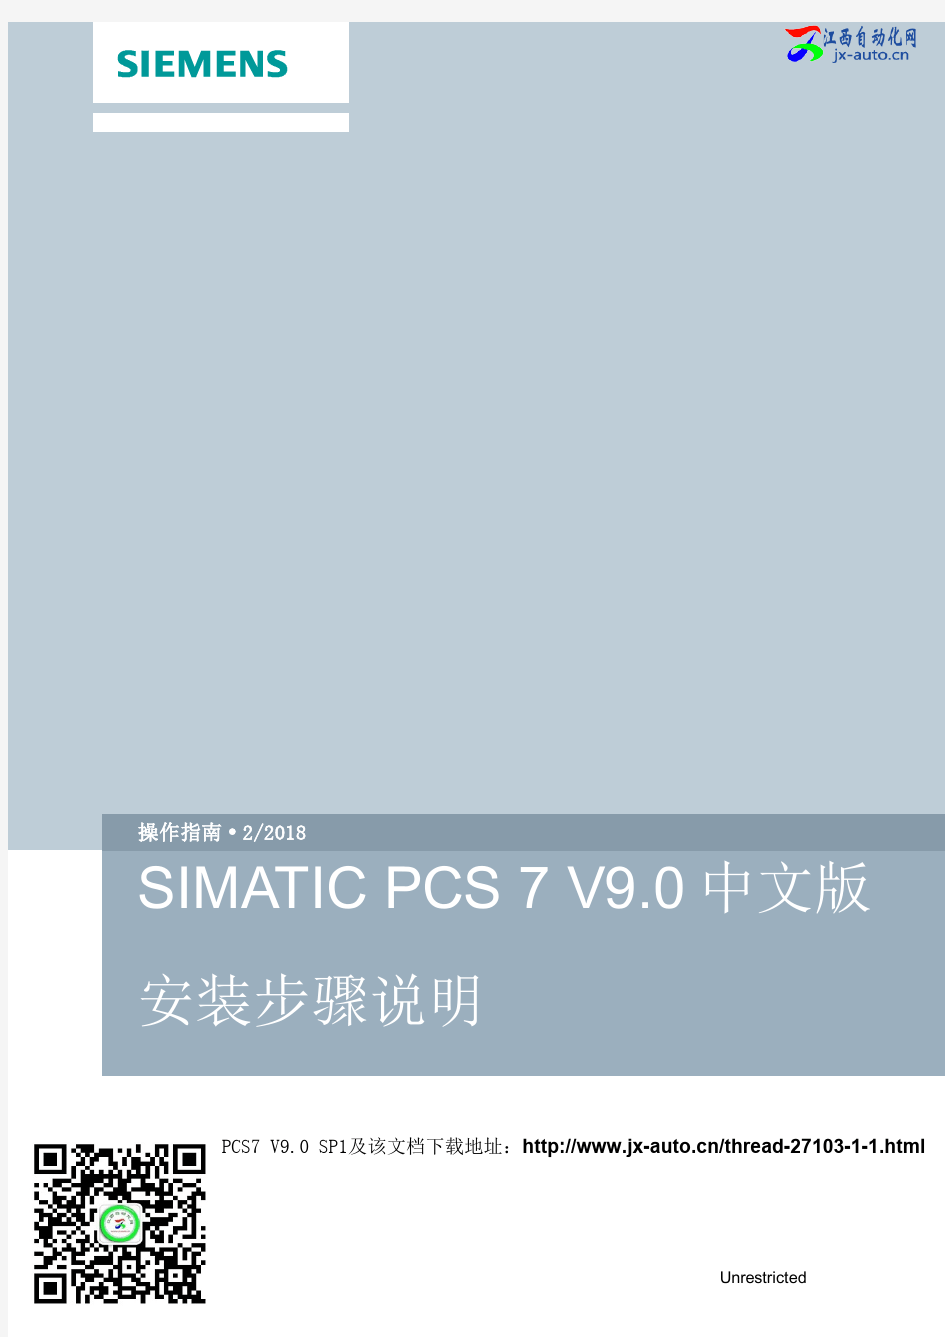 SIMATIC PCS 7 V9.0 中文版安装步骤说明